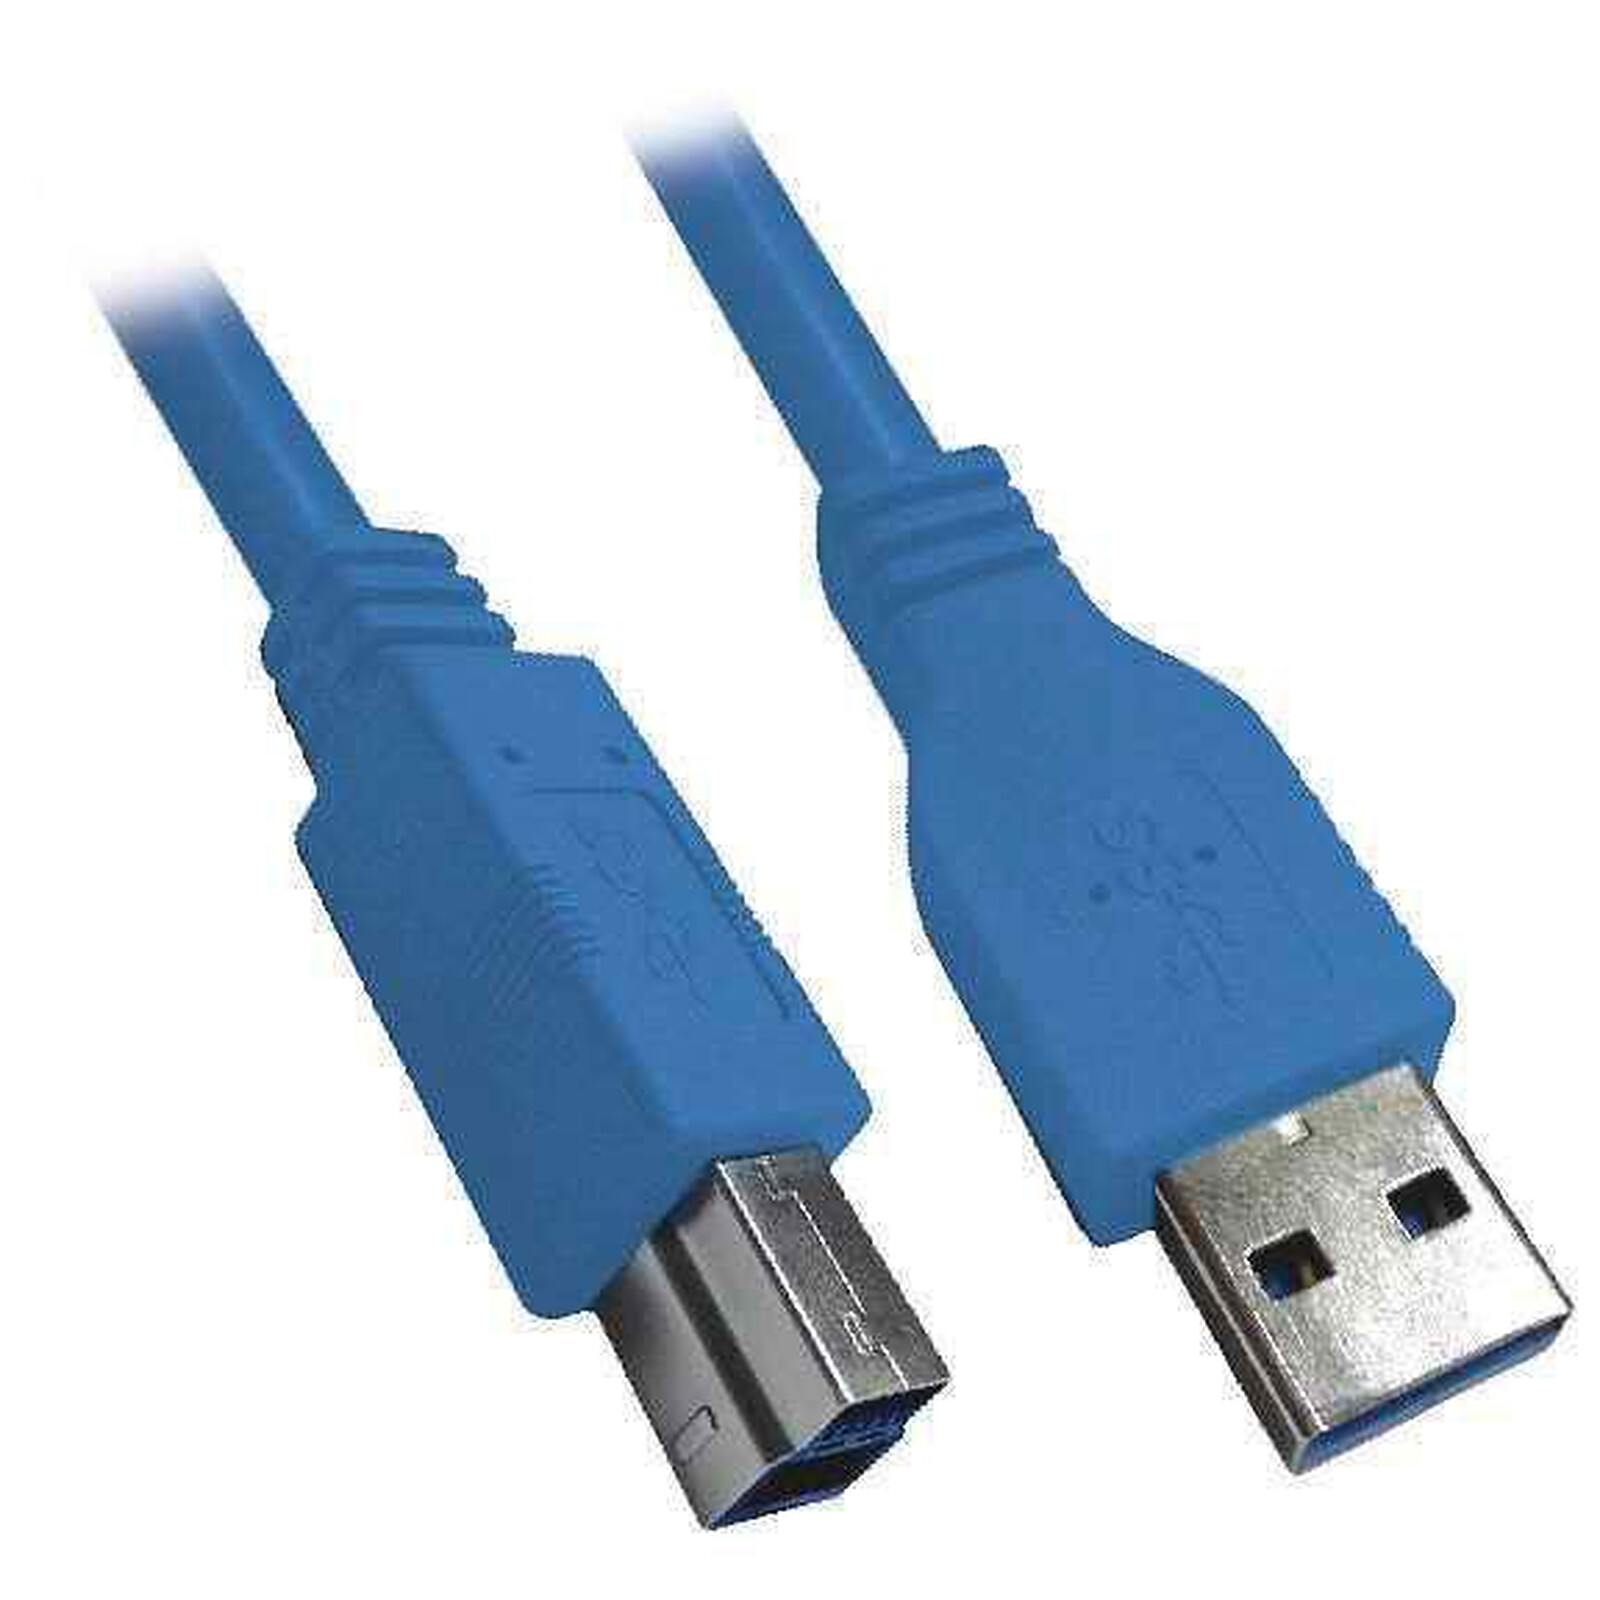 Rallonge USB 3.0 Type AA (Mâle/Femelle) - 1.8 m - USB - Garantie 3 ans LDLC